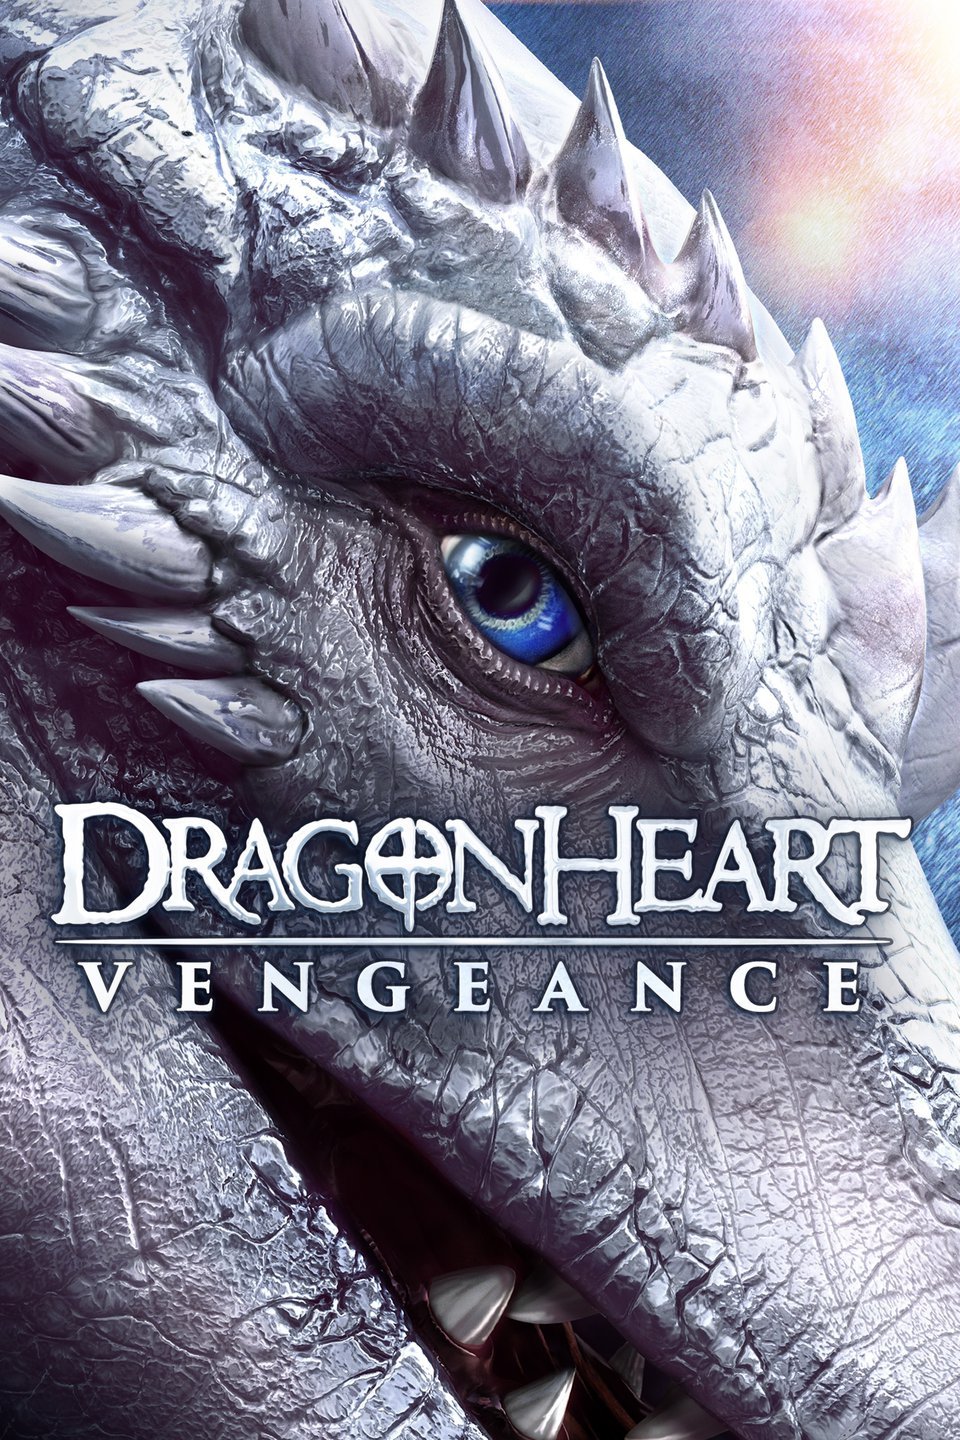 [MINI Super-HQ] Dragonheart: Vengeance (2020) ดราก้อนฮาร์ท ศึกล้างแค้น [1080p] [พากย์ไทย 5.1 + เสียงอังกฤษ DTS] [บรรยายไทย + อังกฤษ] [เสียงไทย + ซับไทย] [PANDAFILE]